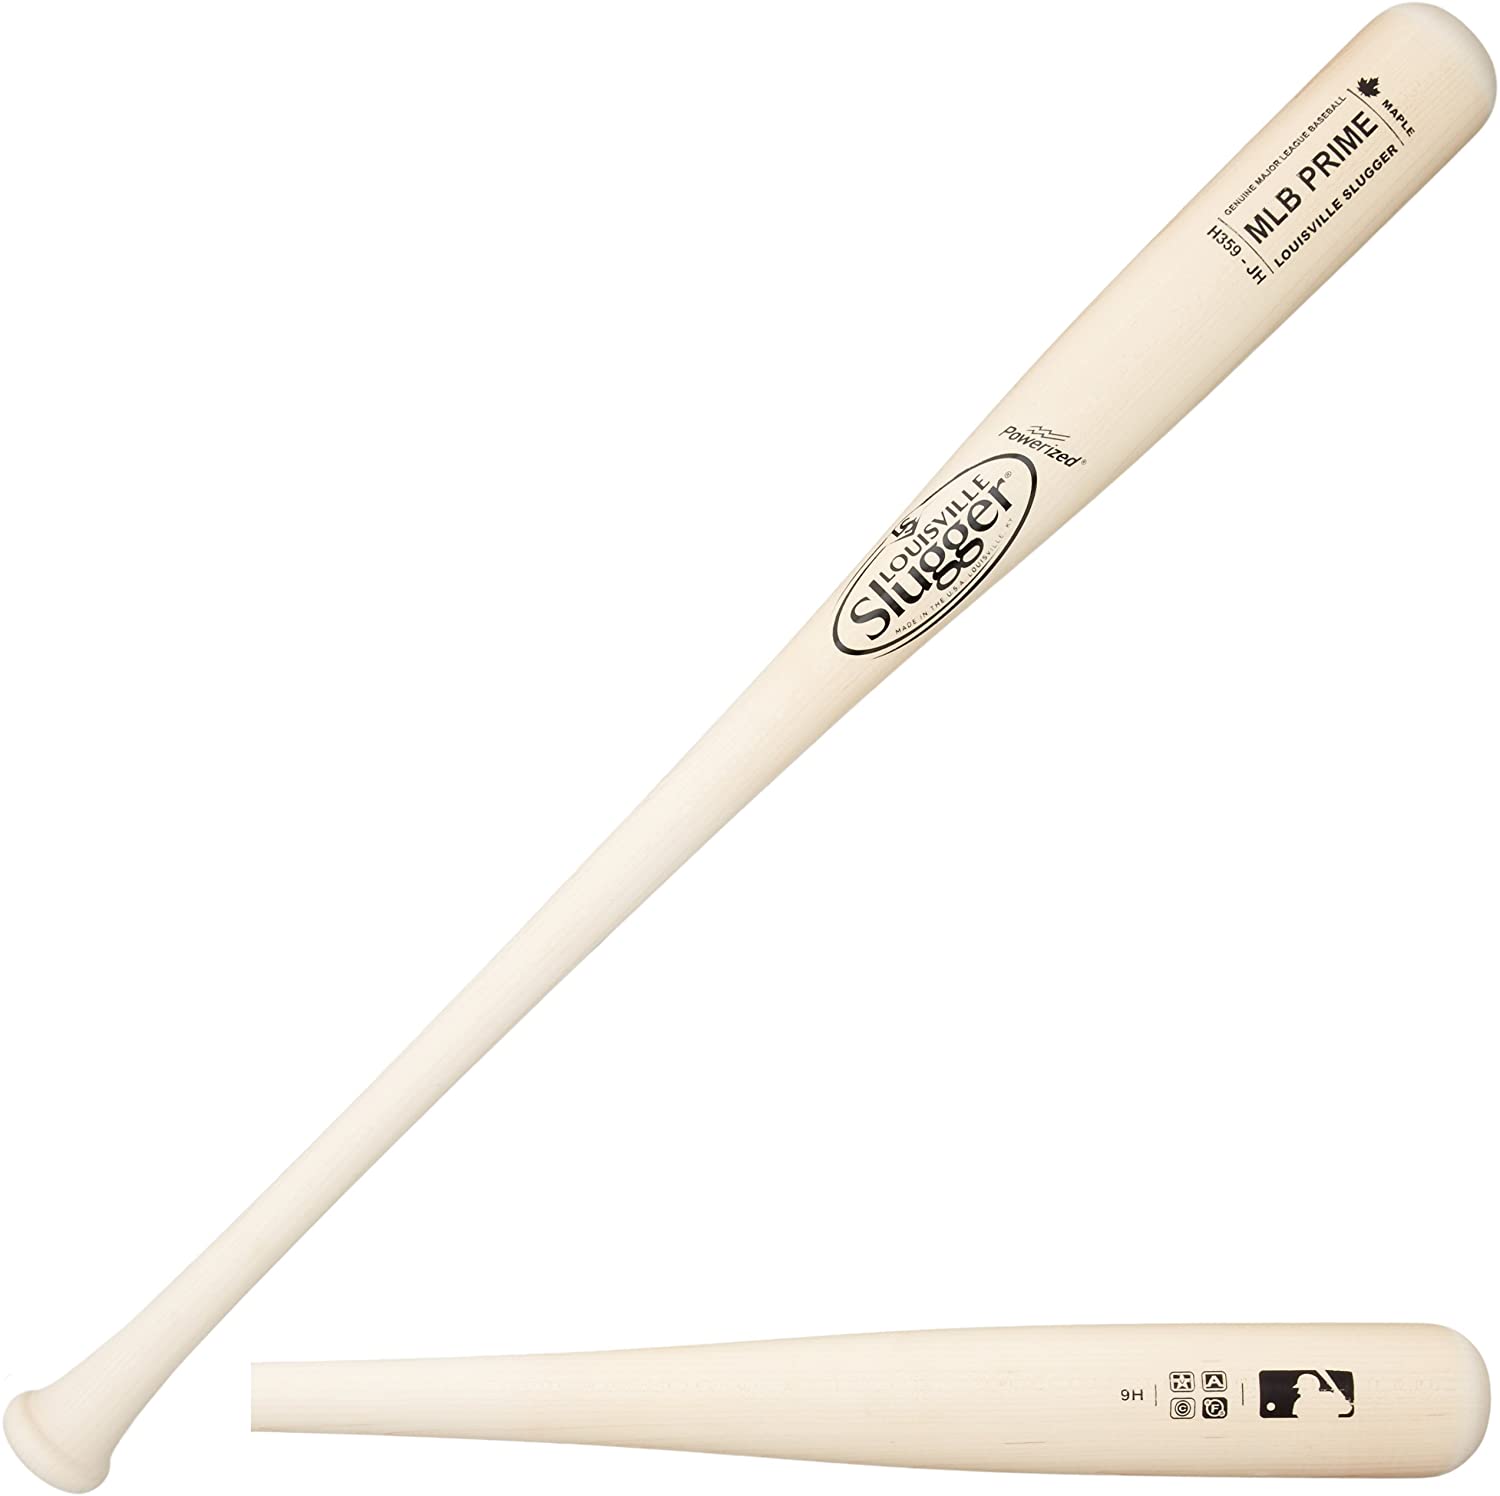 louisville-slugger-mlb-prime-maple-wood-baseball-bat-unfinished-32-inch WBVM14-59CUN-32 inch Louisville  Turning model H359 is swung by Josh Hamilton MLB high-quality veneer